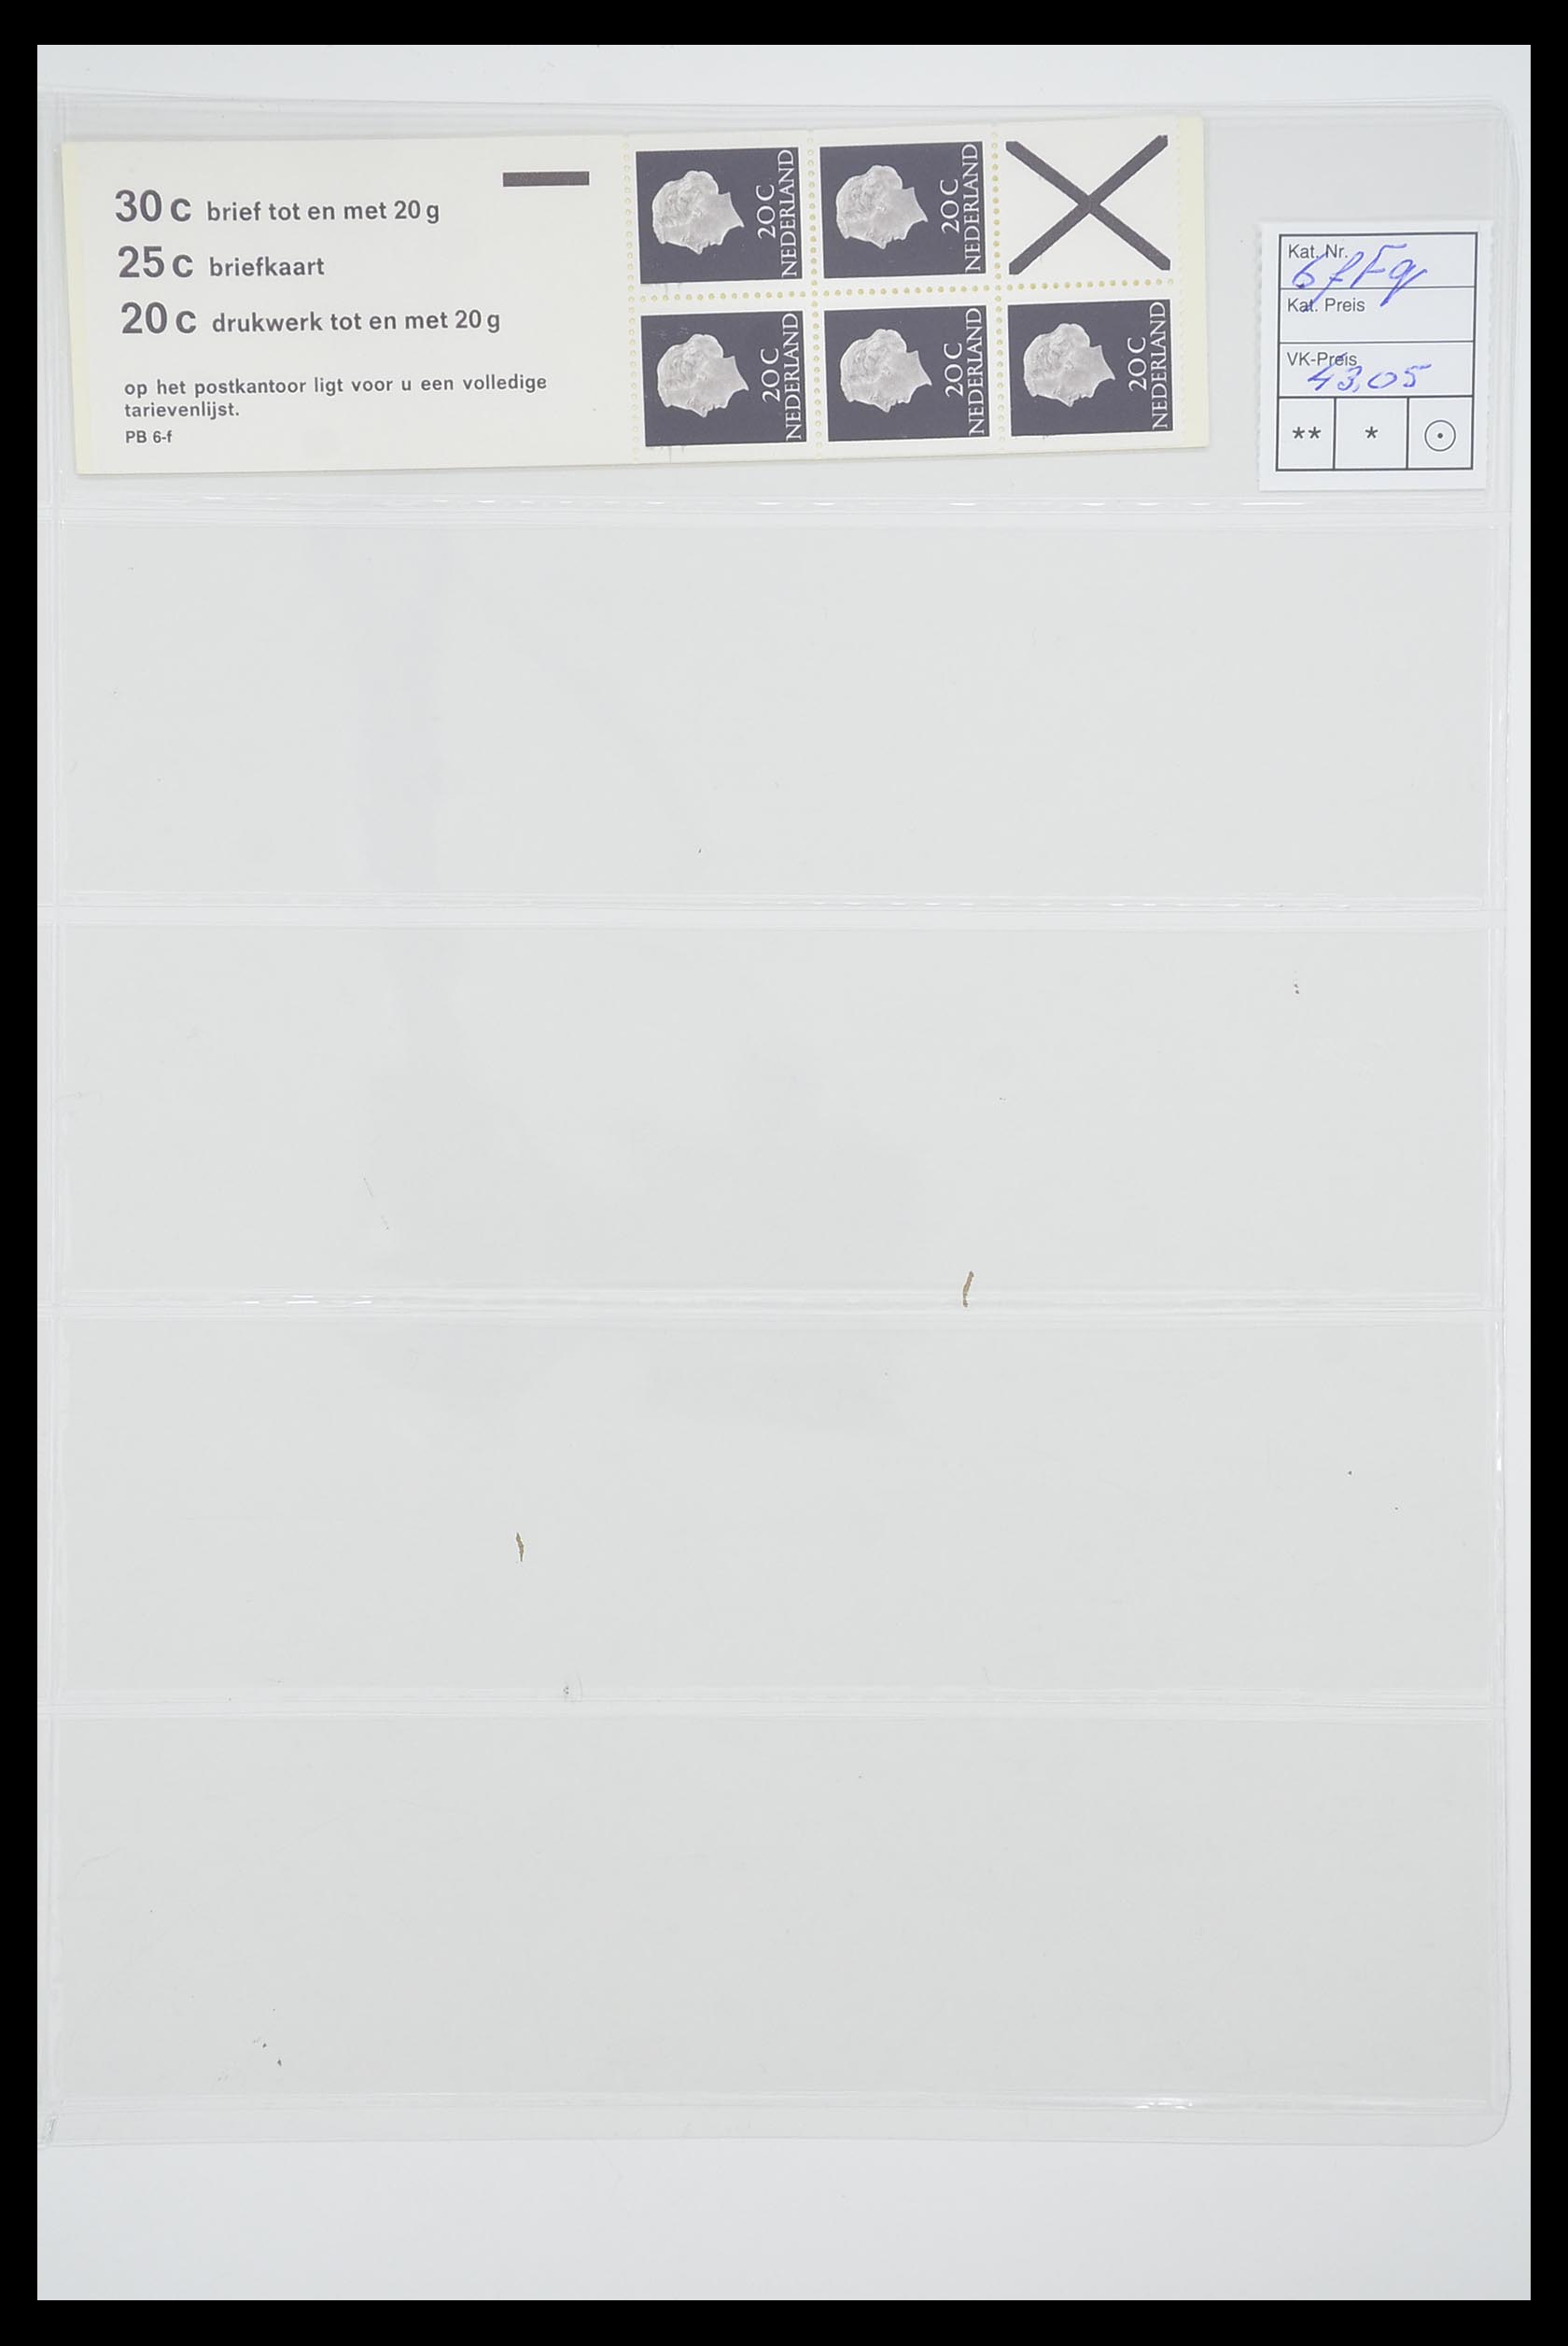 33815 030 - Stamp collection 33815 Netherlands stamp booklets 1964-2001.